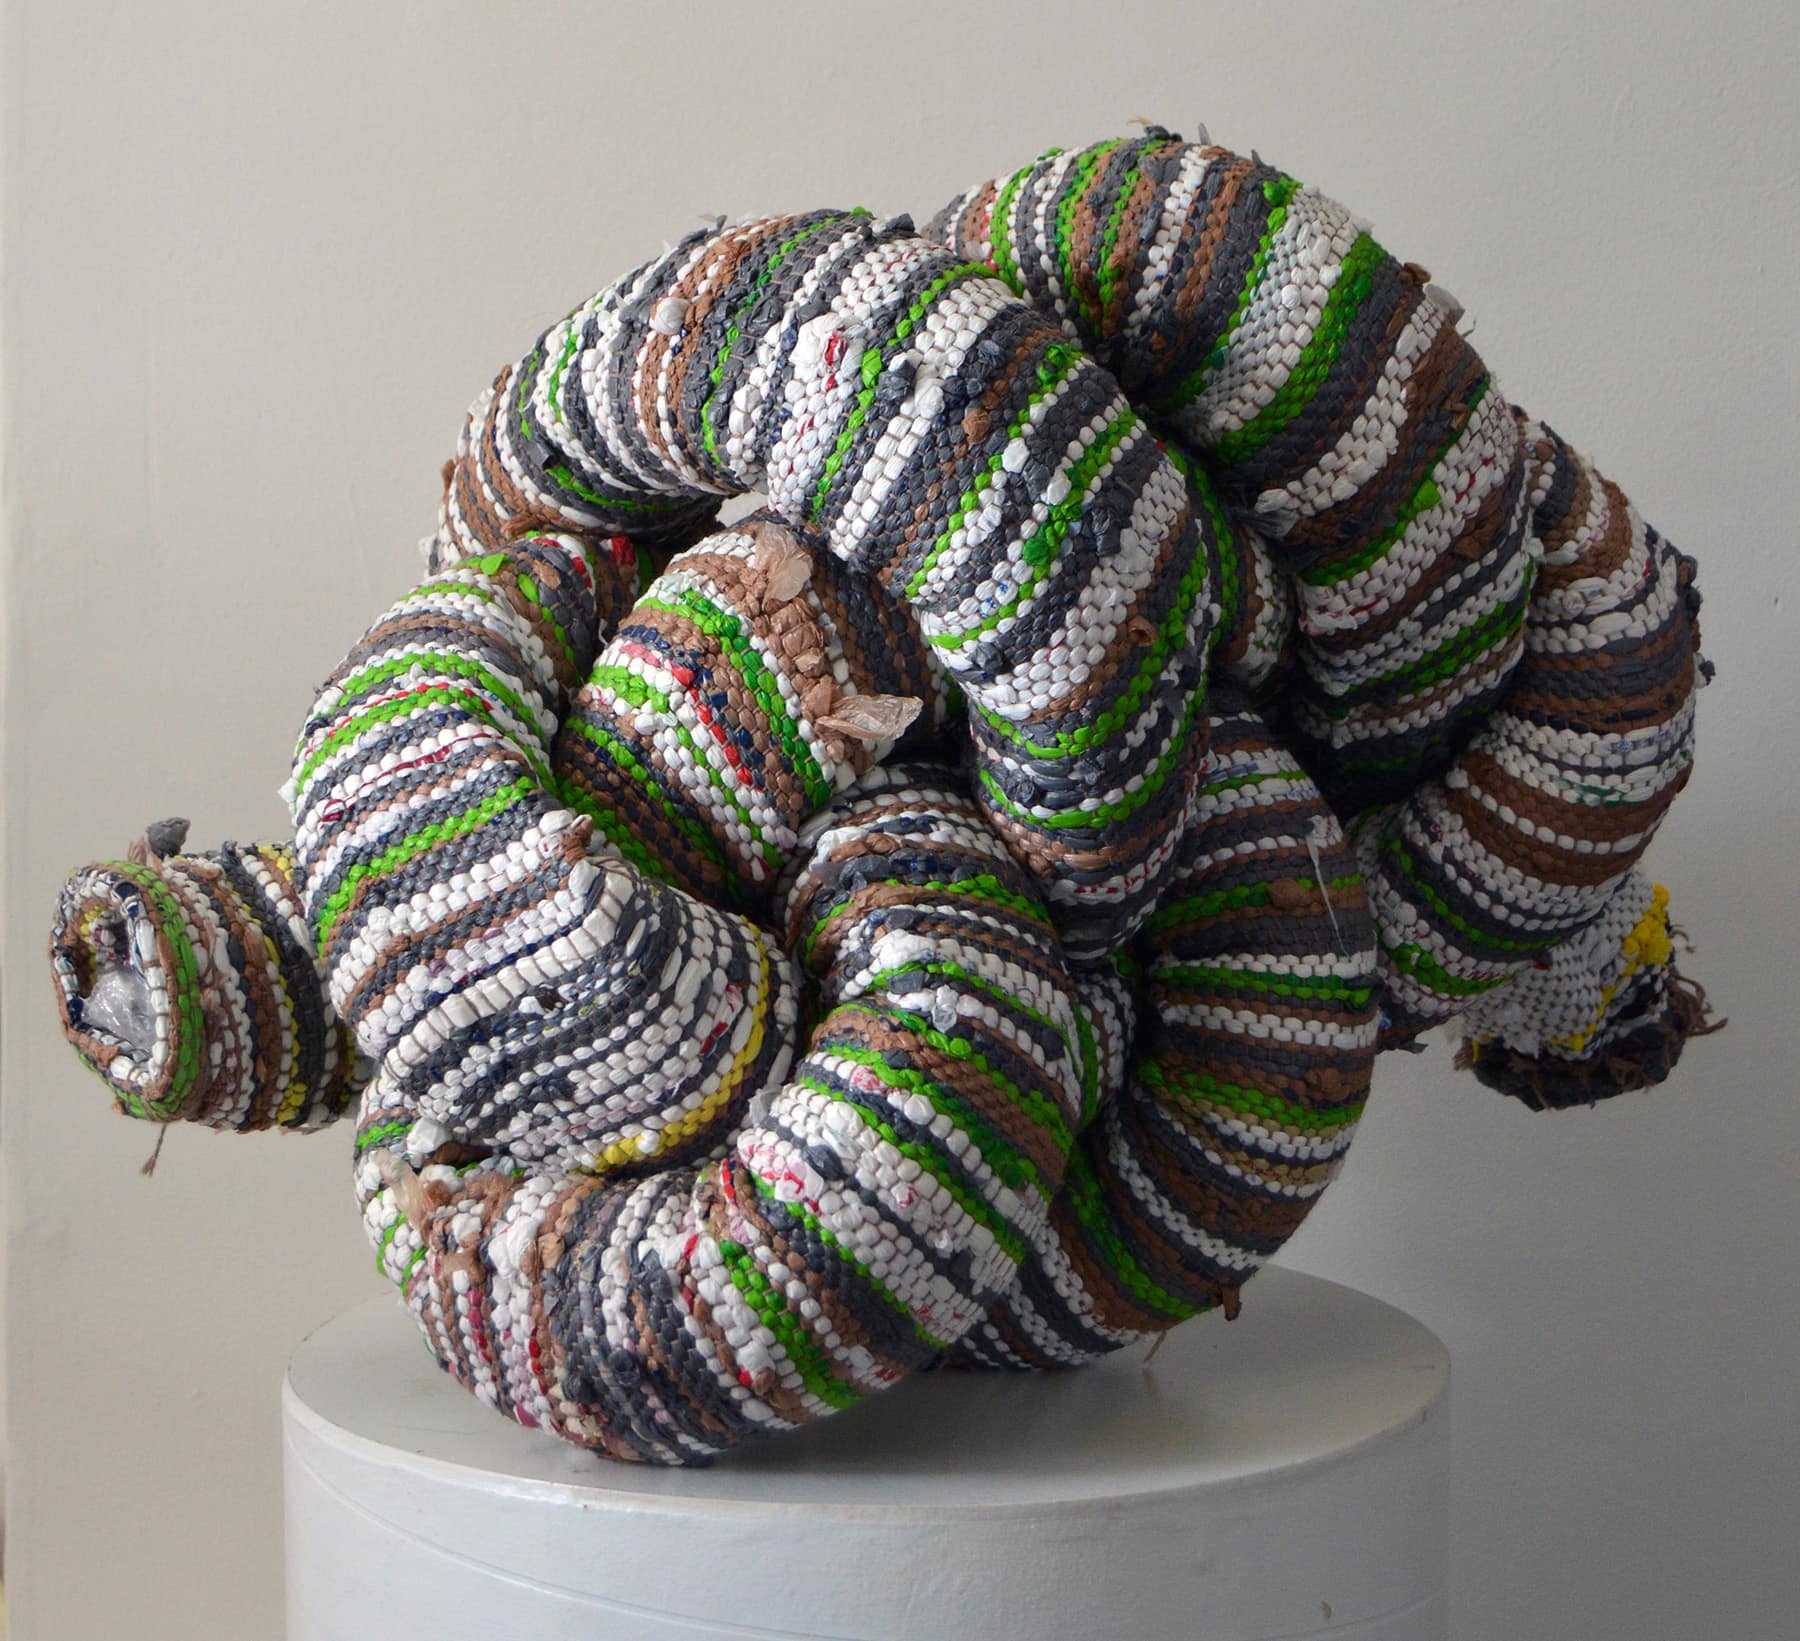 Tubular sculptural weaving